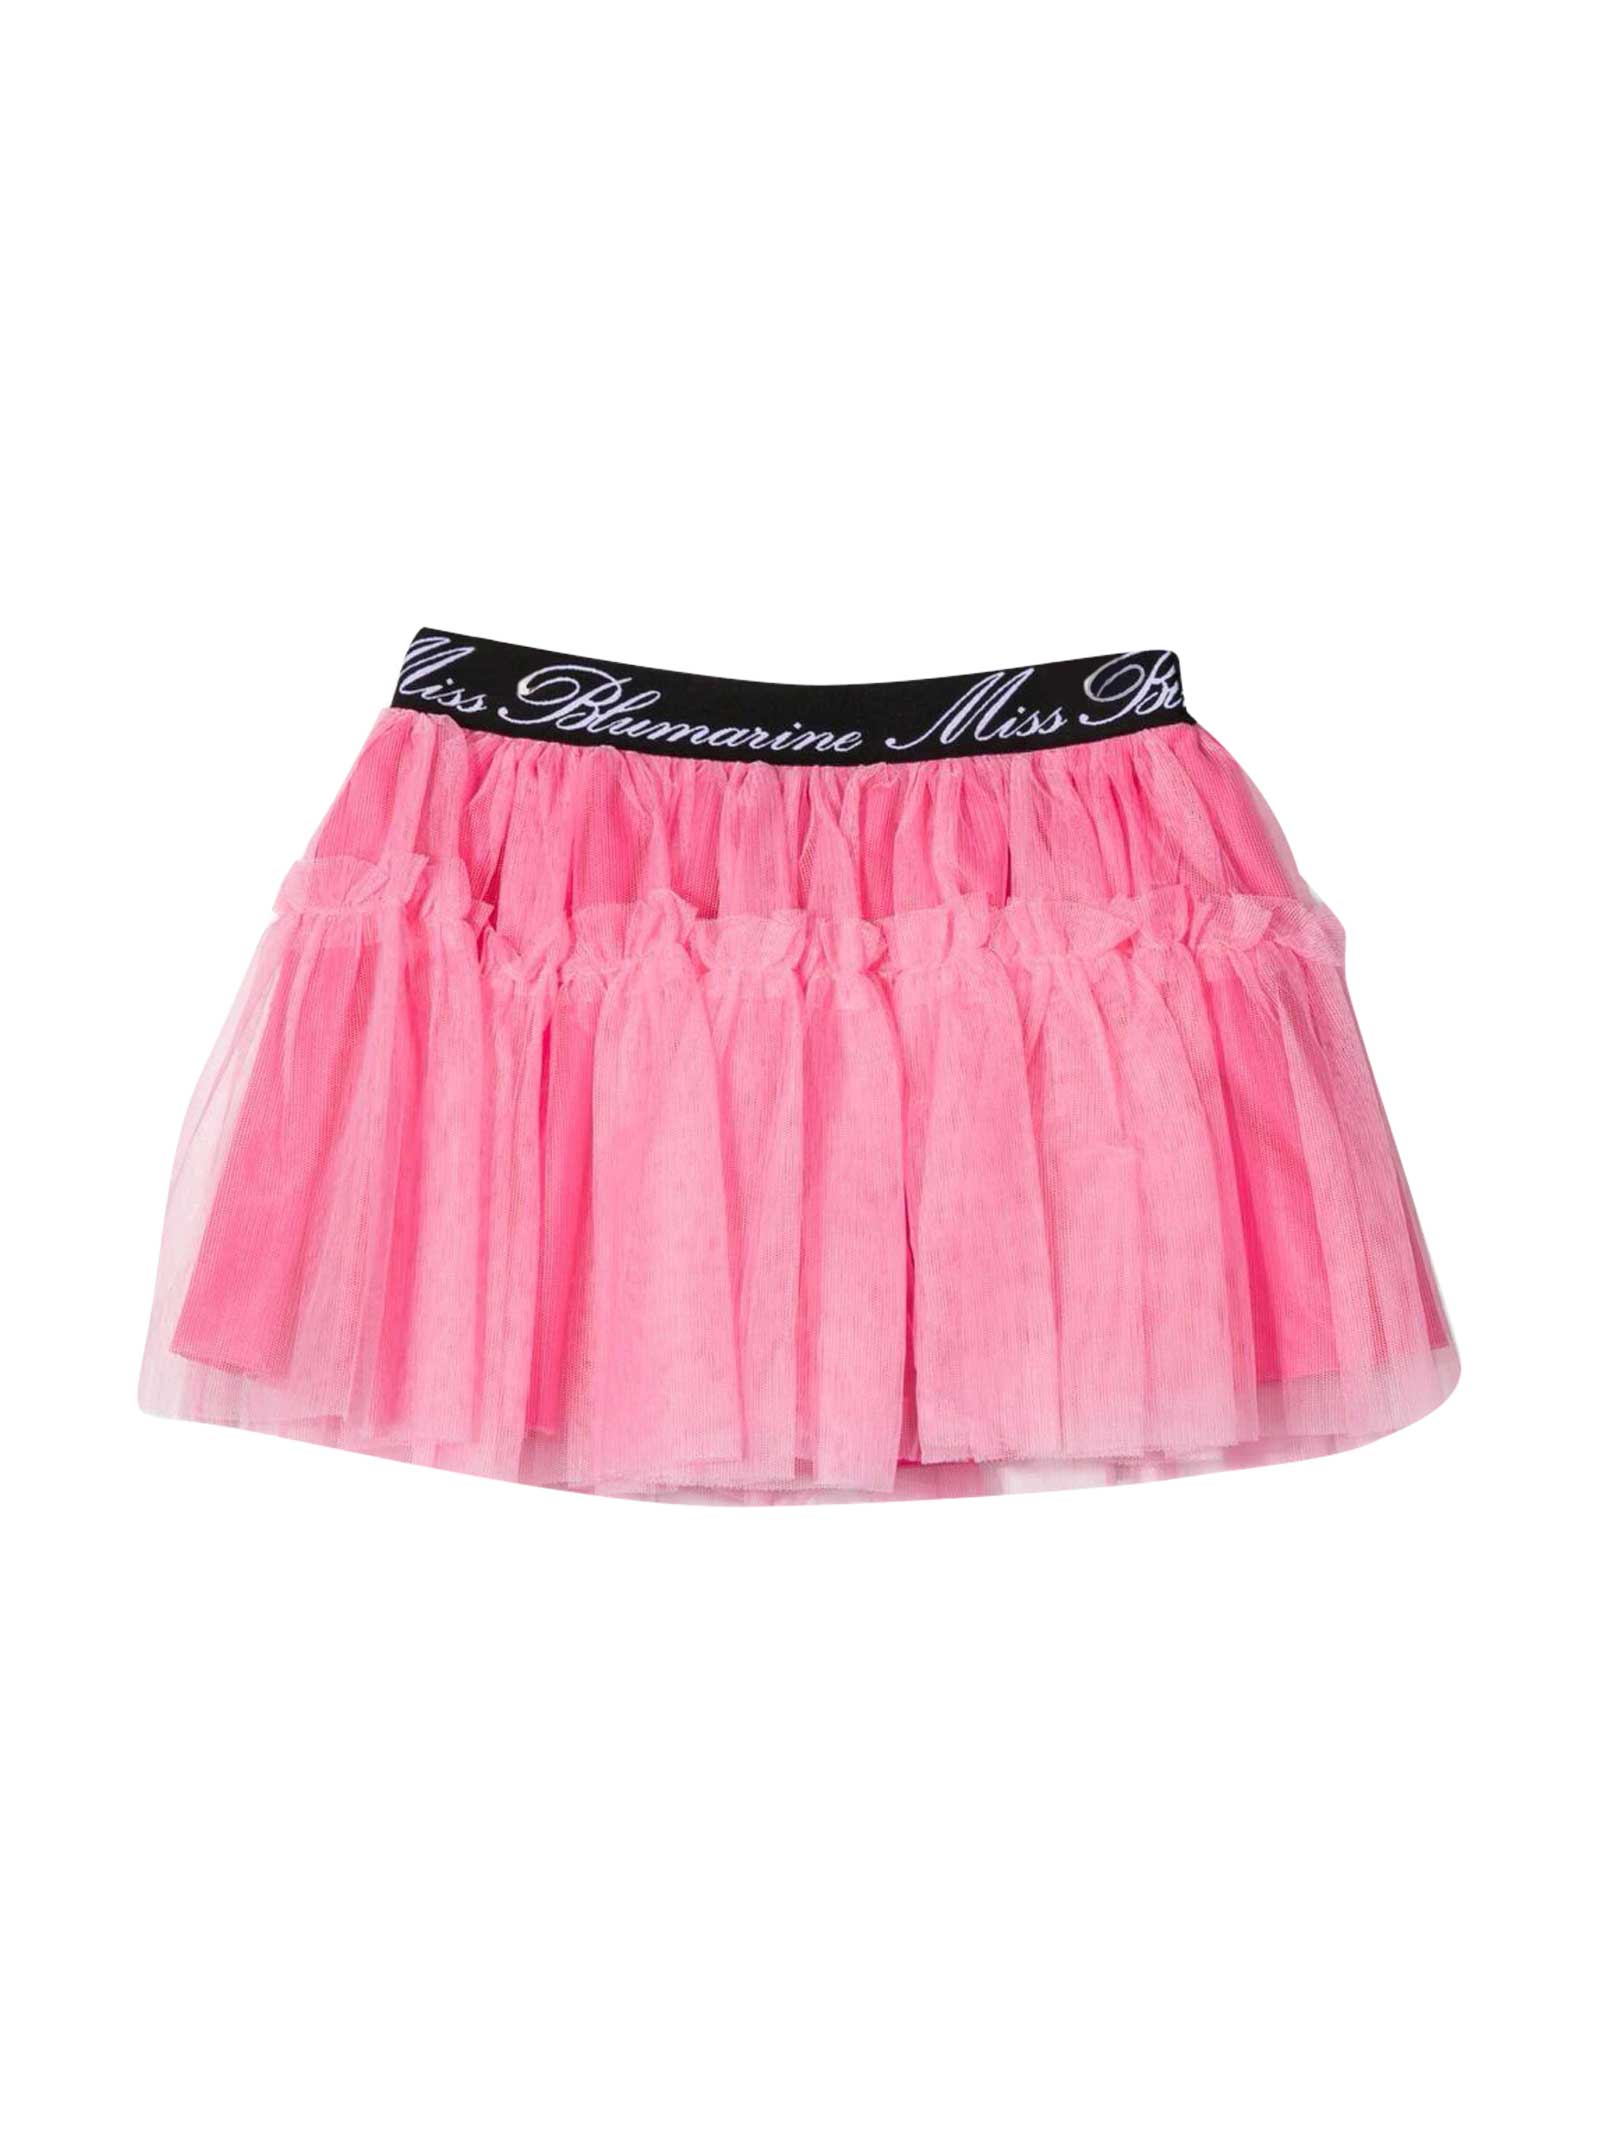 Miss Blumarine Pink Skirt